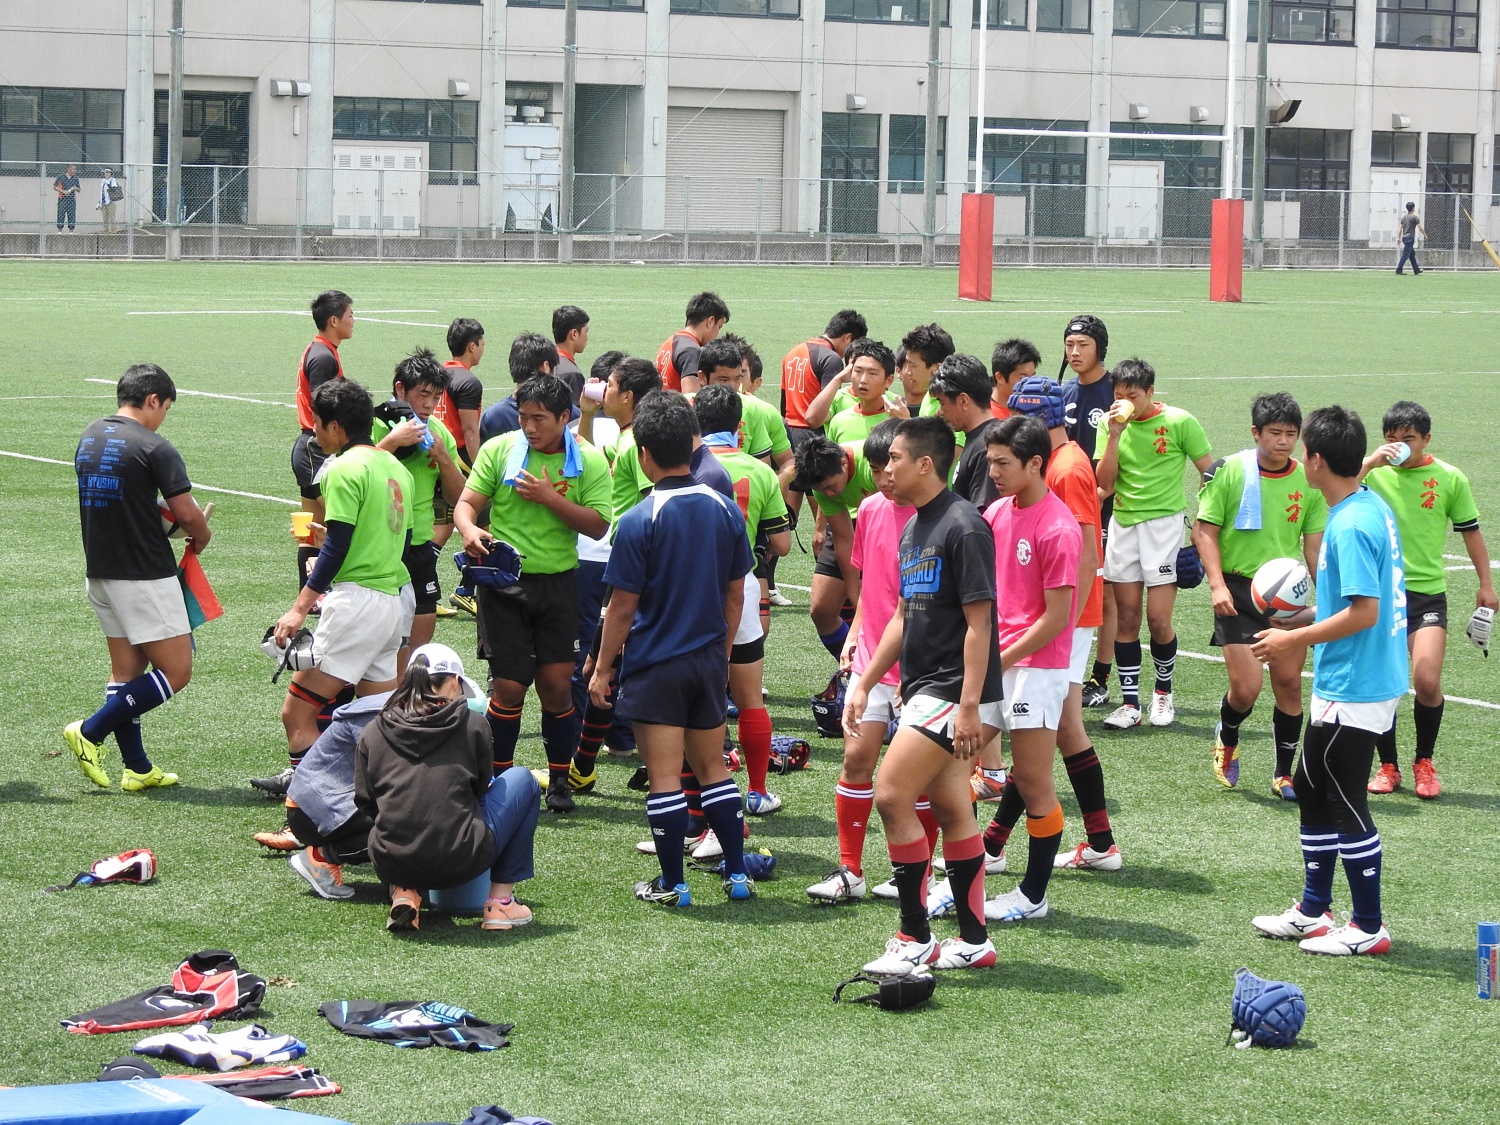 http://kokura-rugby.sakura.ne.jp/DSCN5997_xlarge.JPG